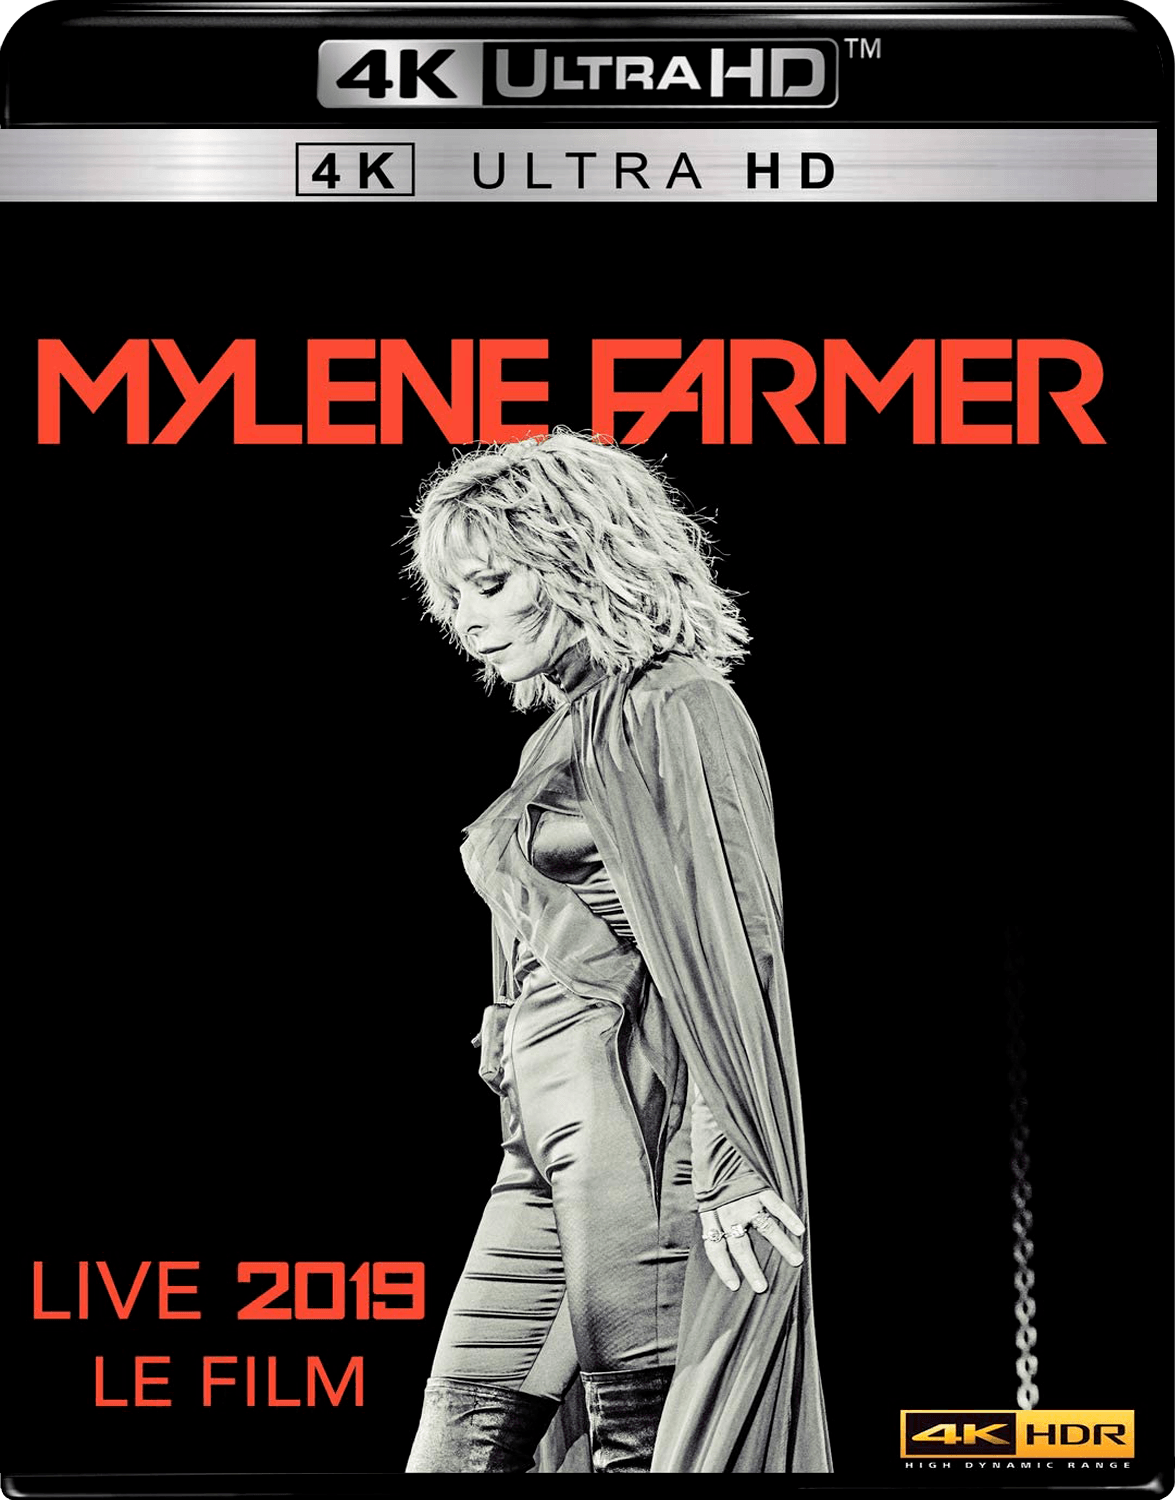 Mylene Farmer Live 2019 - Le film (4K UHD Blu-ray)